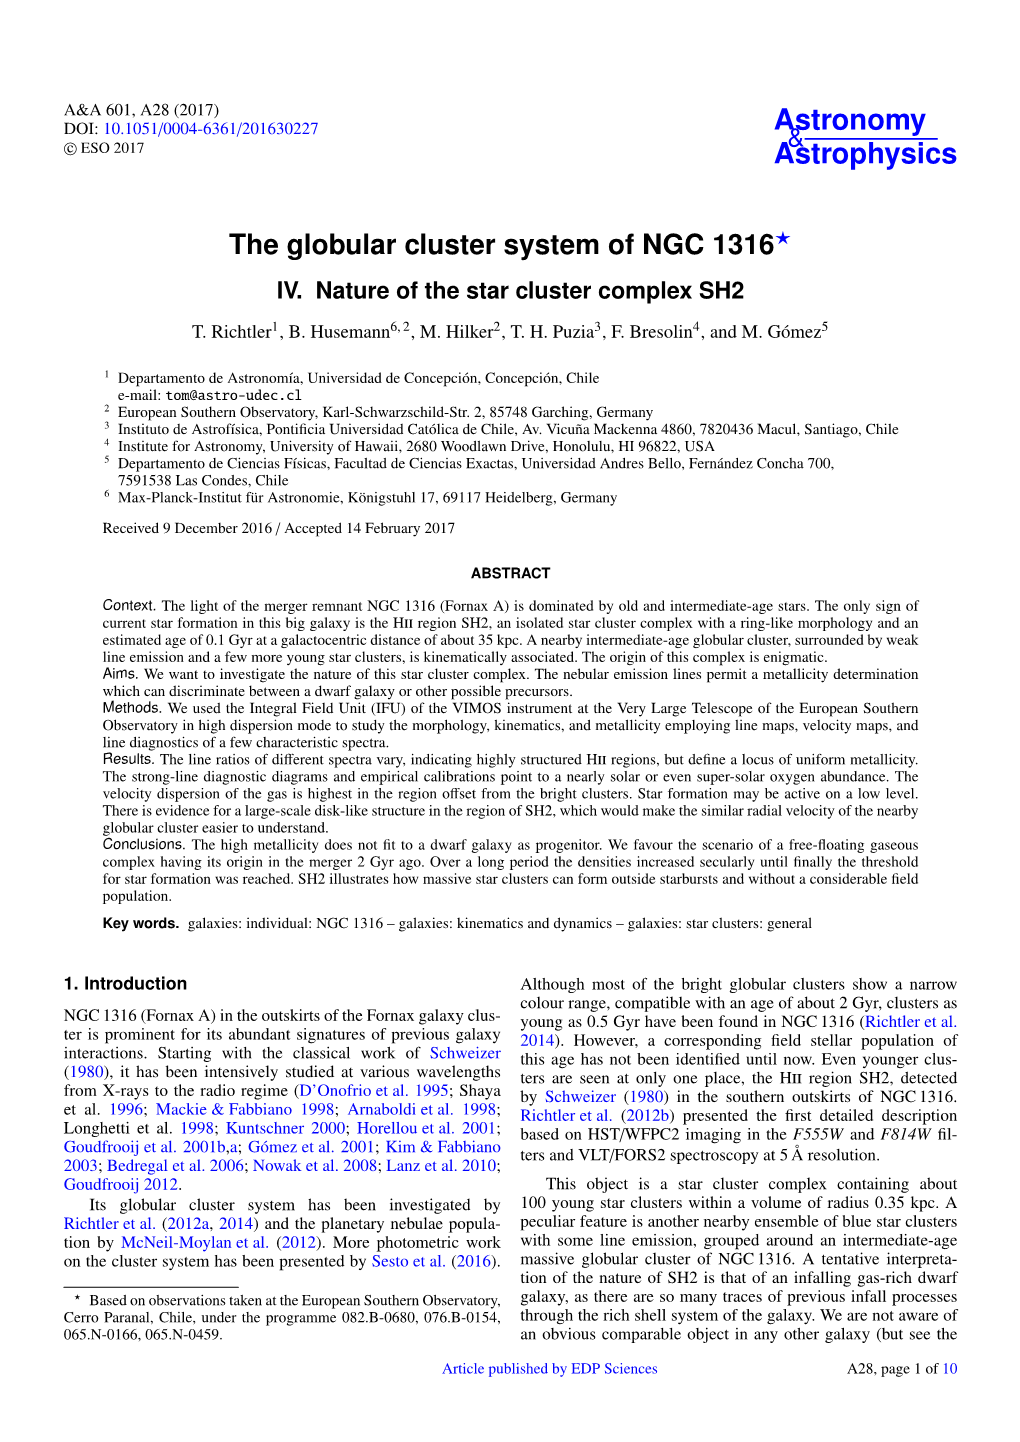 The Globular Cluster System of NGC 1316? IV